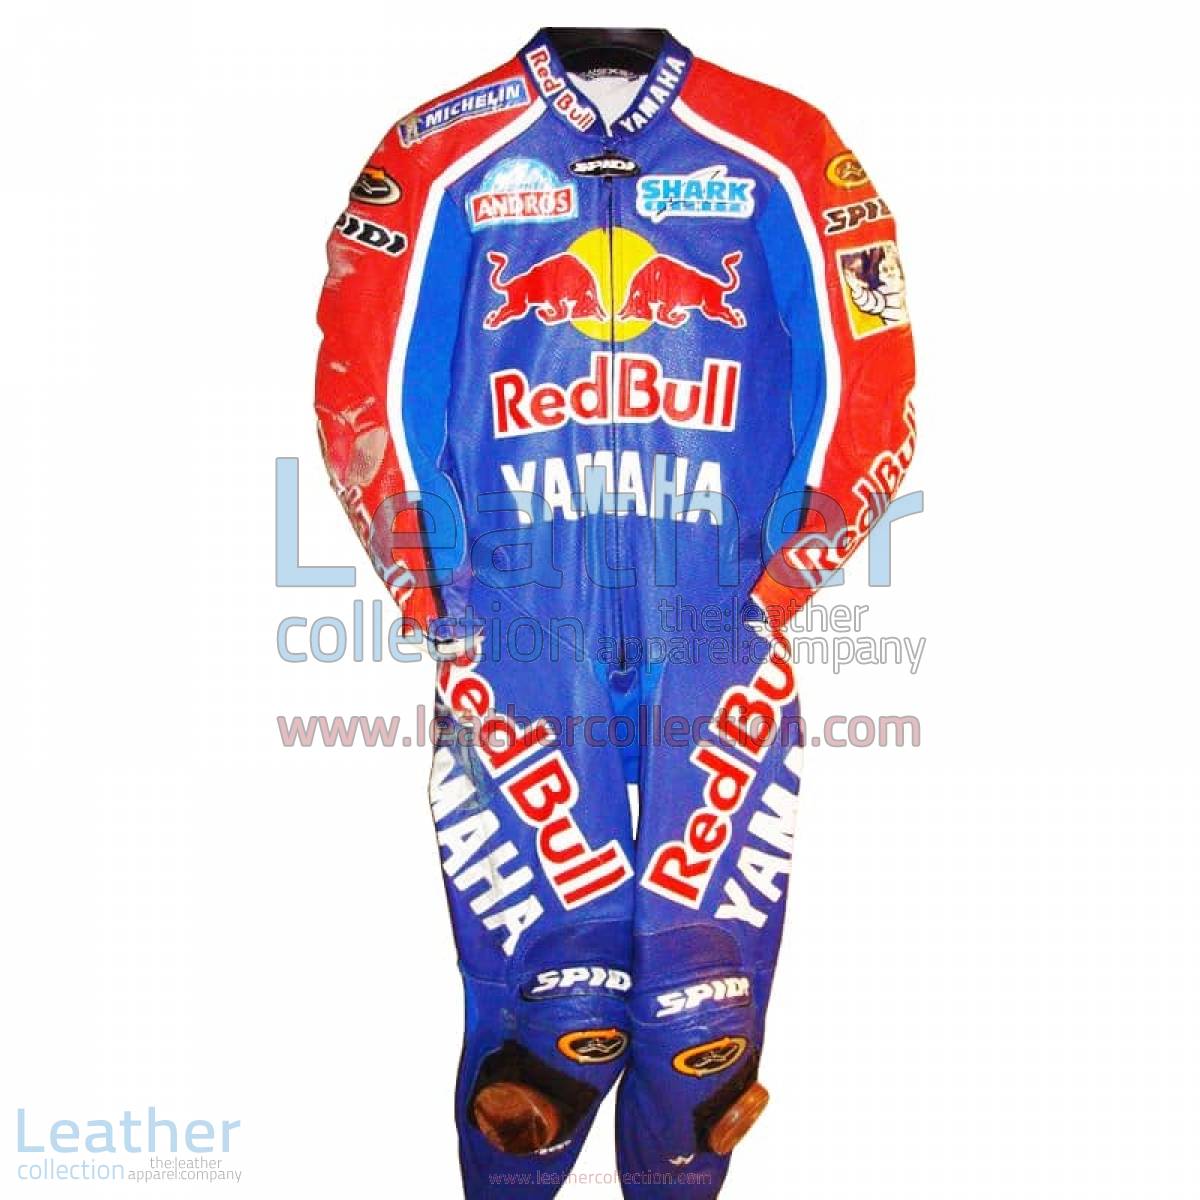 Régis Laconi Red Bull Yamaha GP 1999 Racing Suit